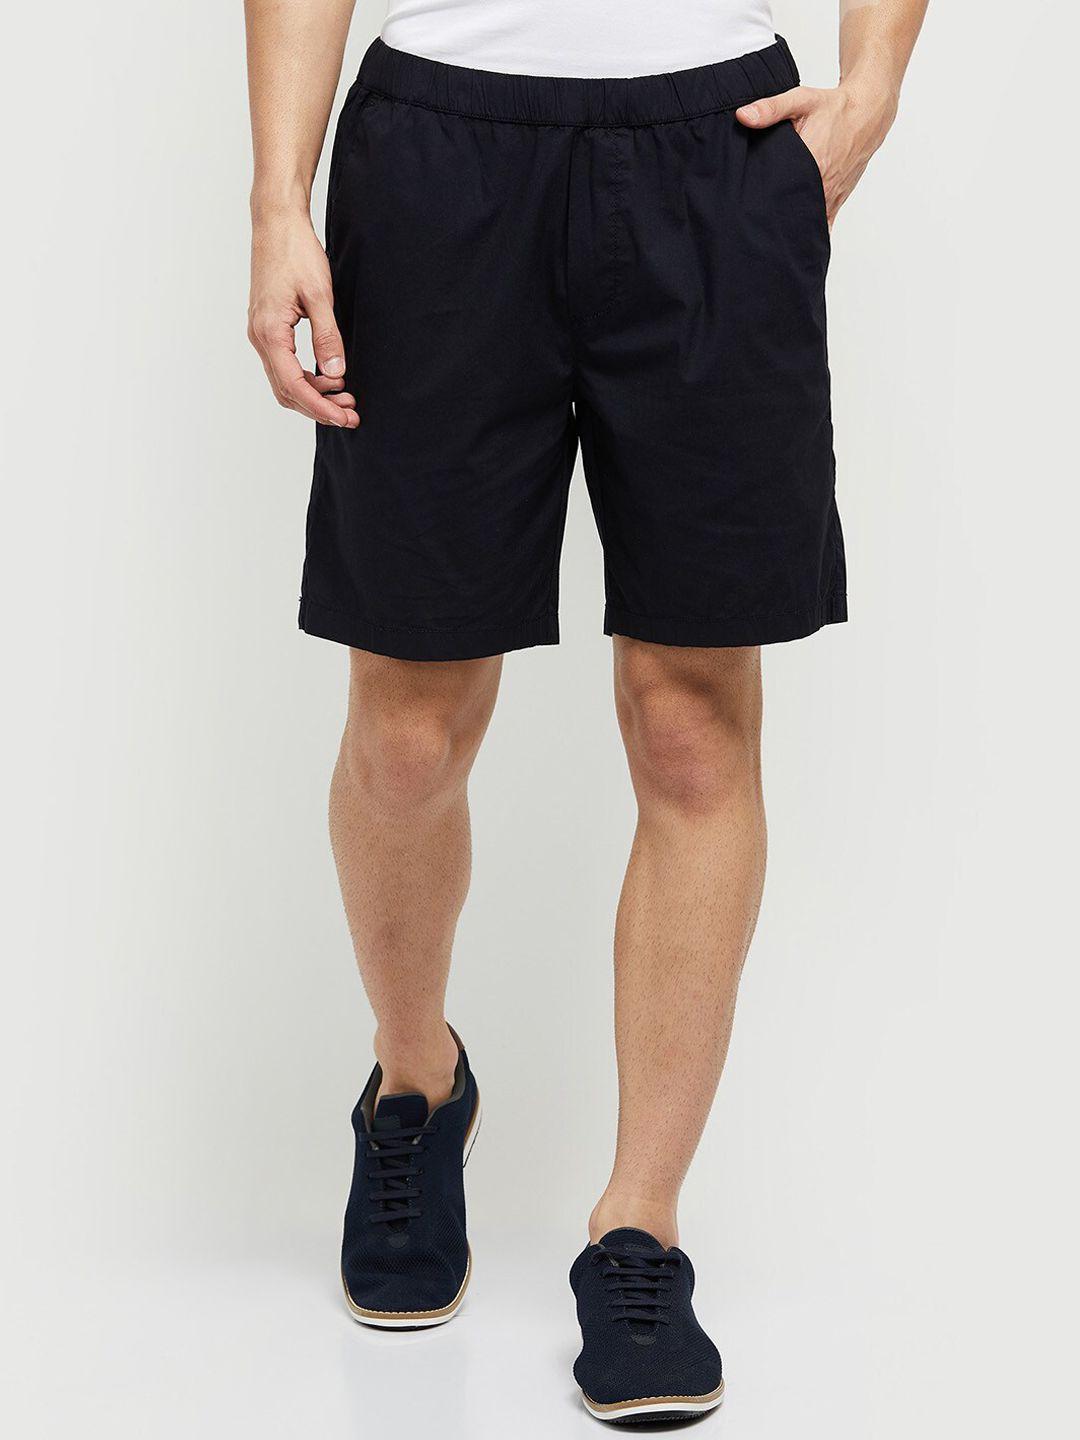 max-men-cotton--sports-shorts